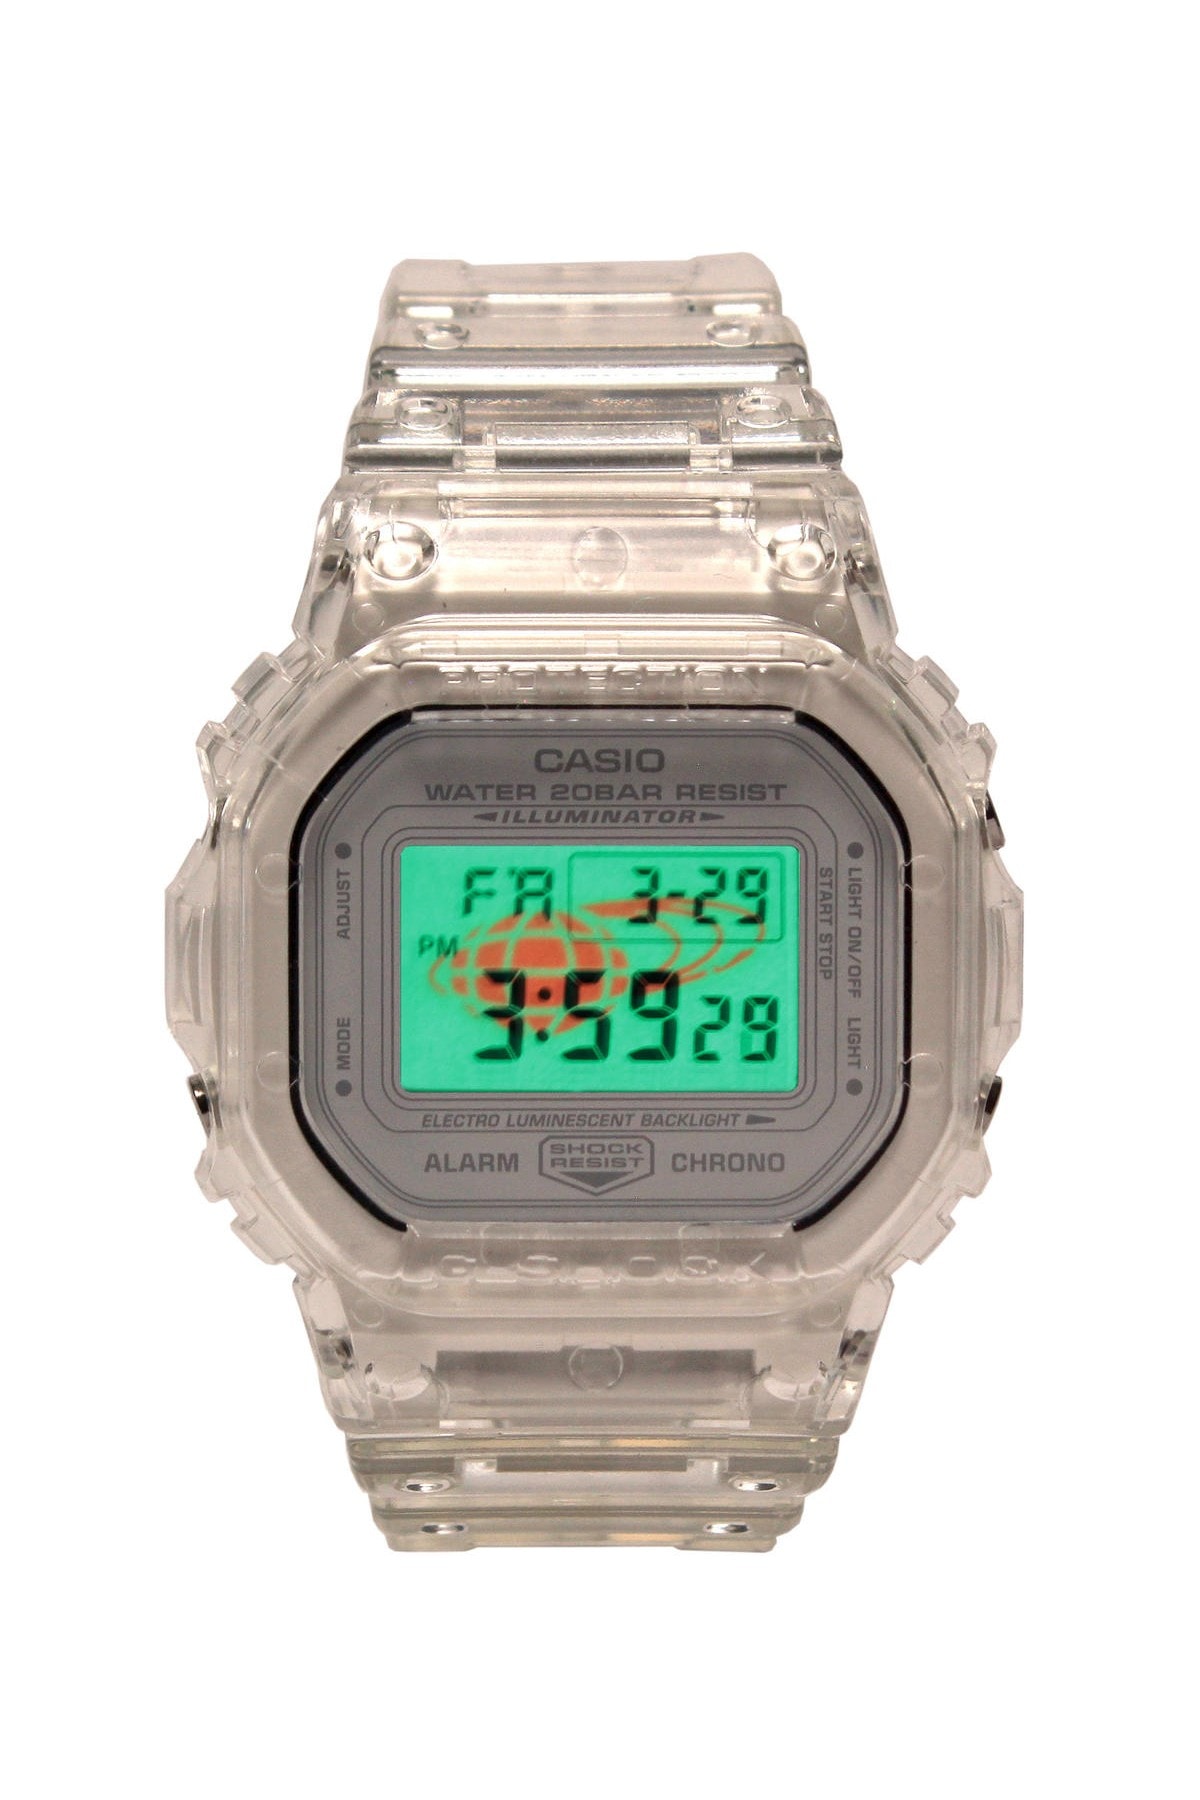 BEAMS x G-Shock 全新聯名透明 DW-5600 錶款發佈